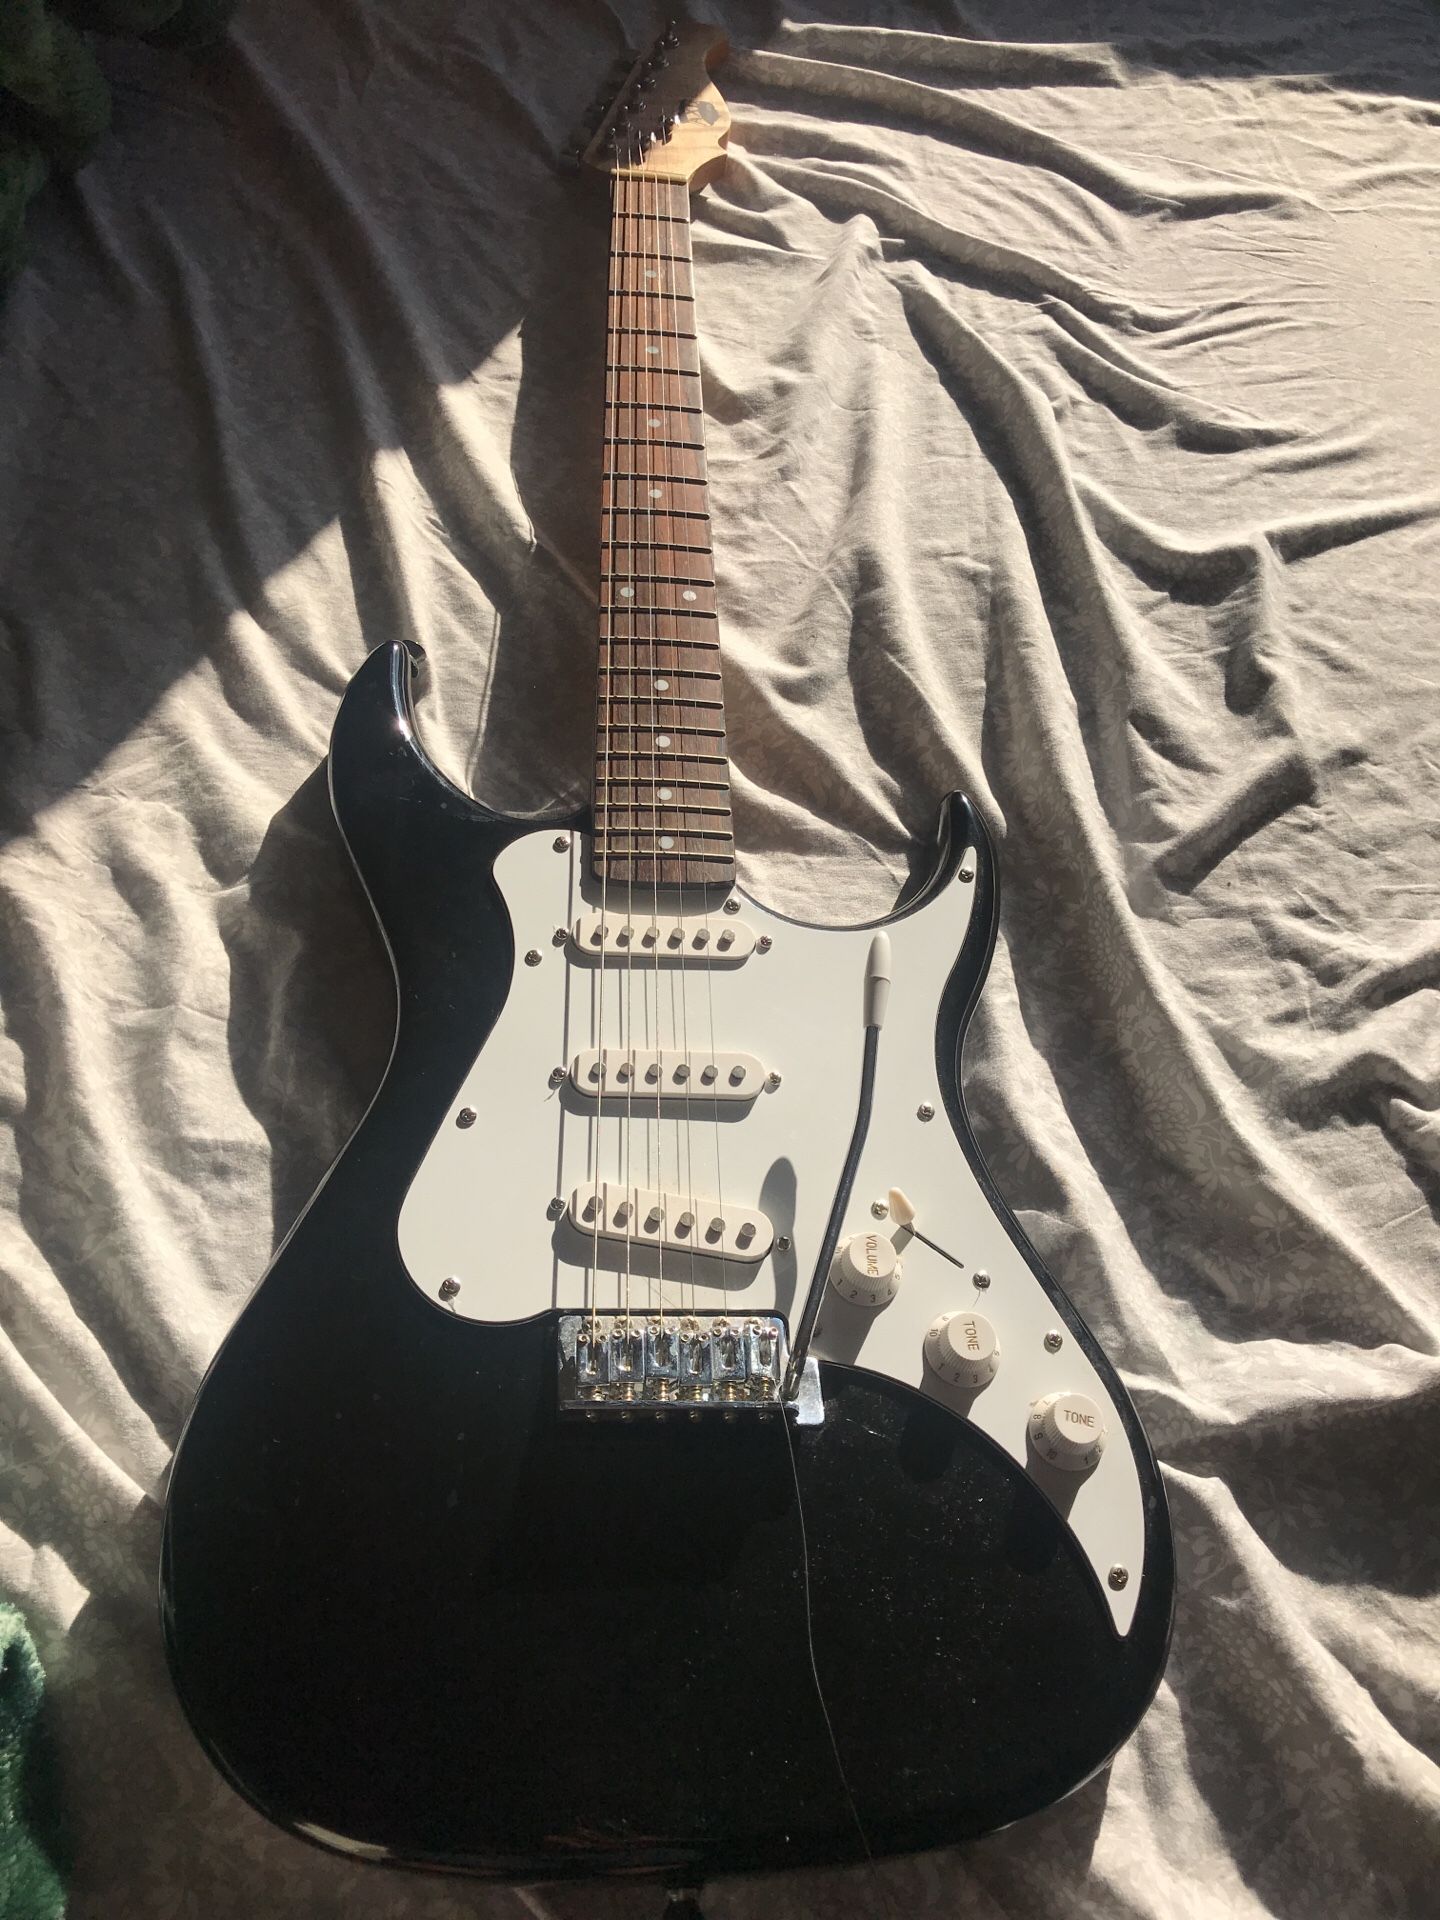 Axl electric guitar